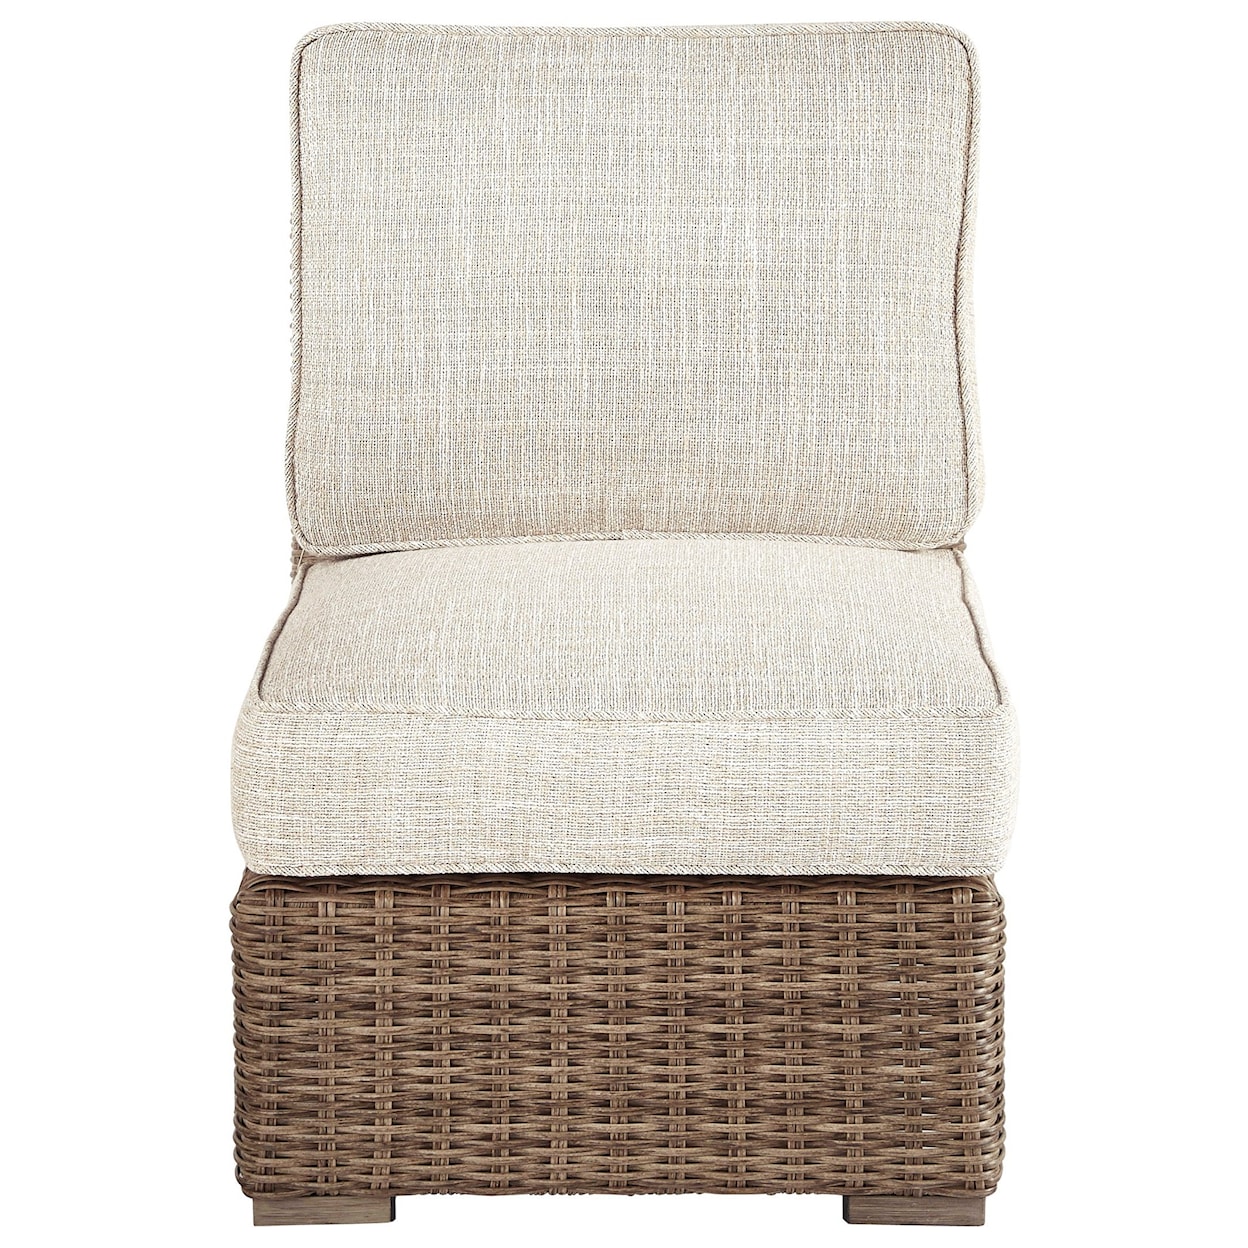 Ashley Signature Design Beachcroft Armless Chair with Cushion